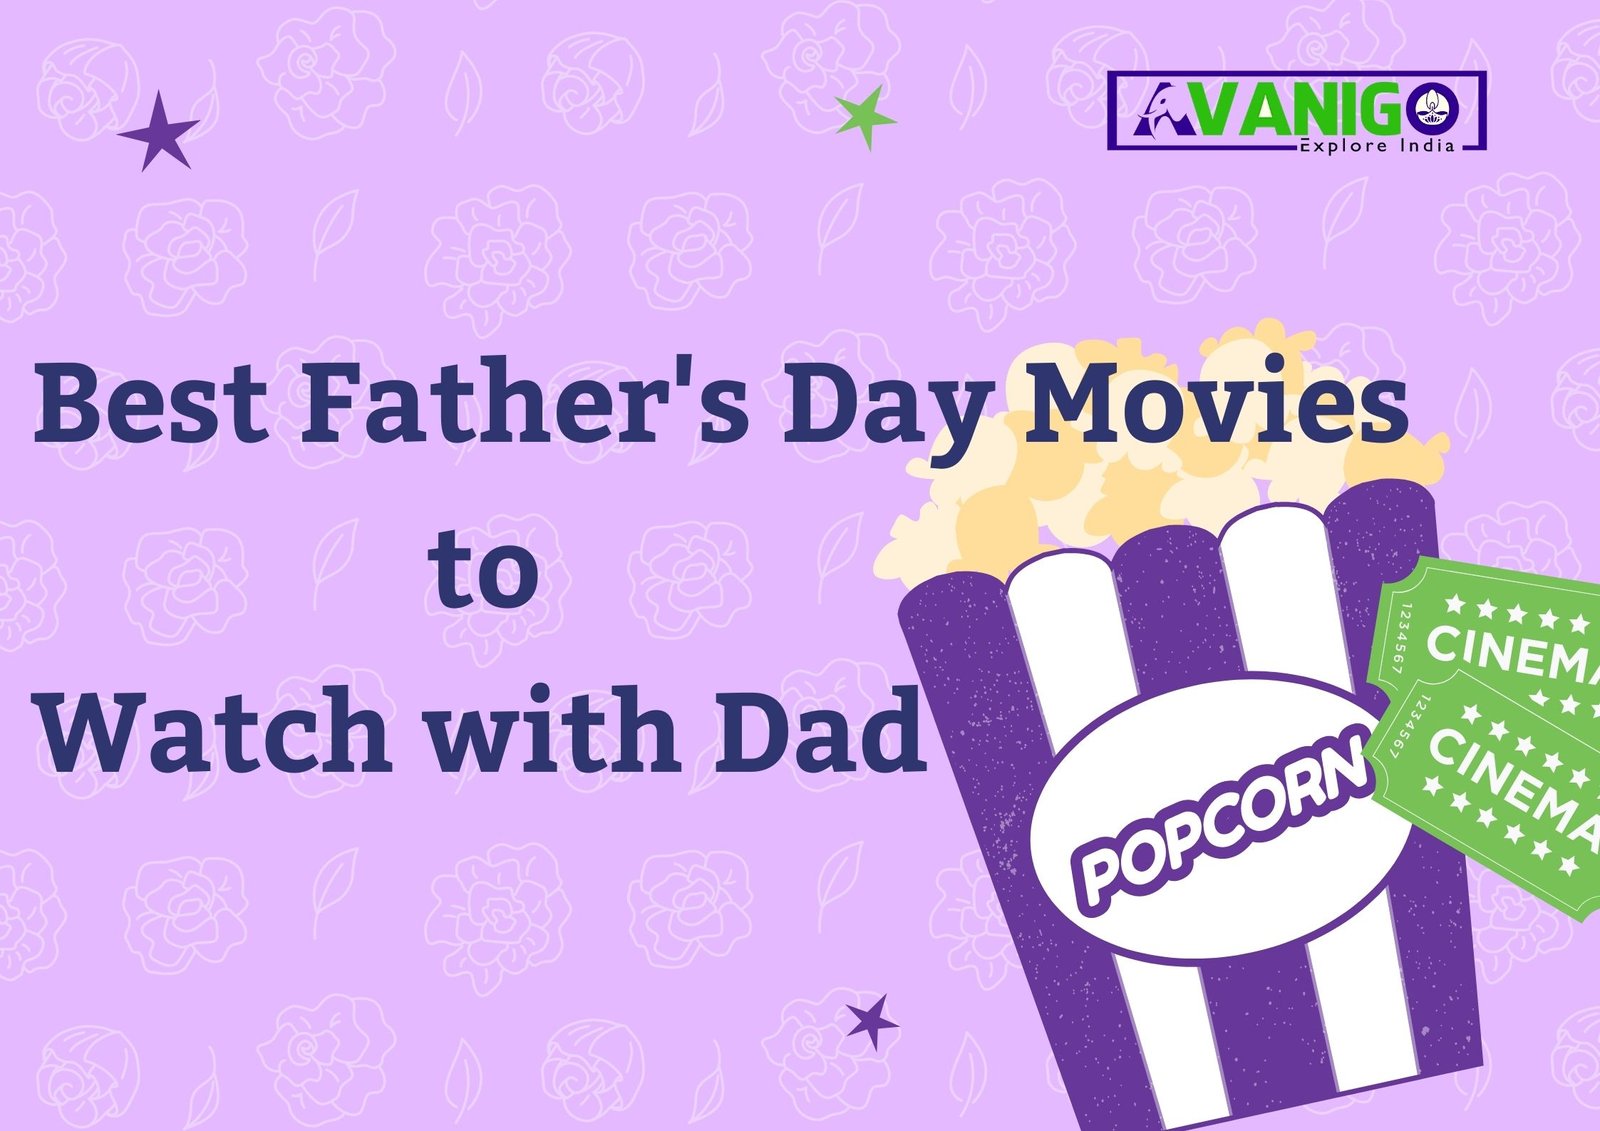 30 Best Father’s Day Movies to Watch with Dad AvaniGo